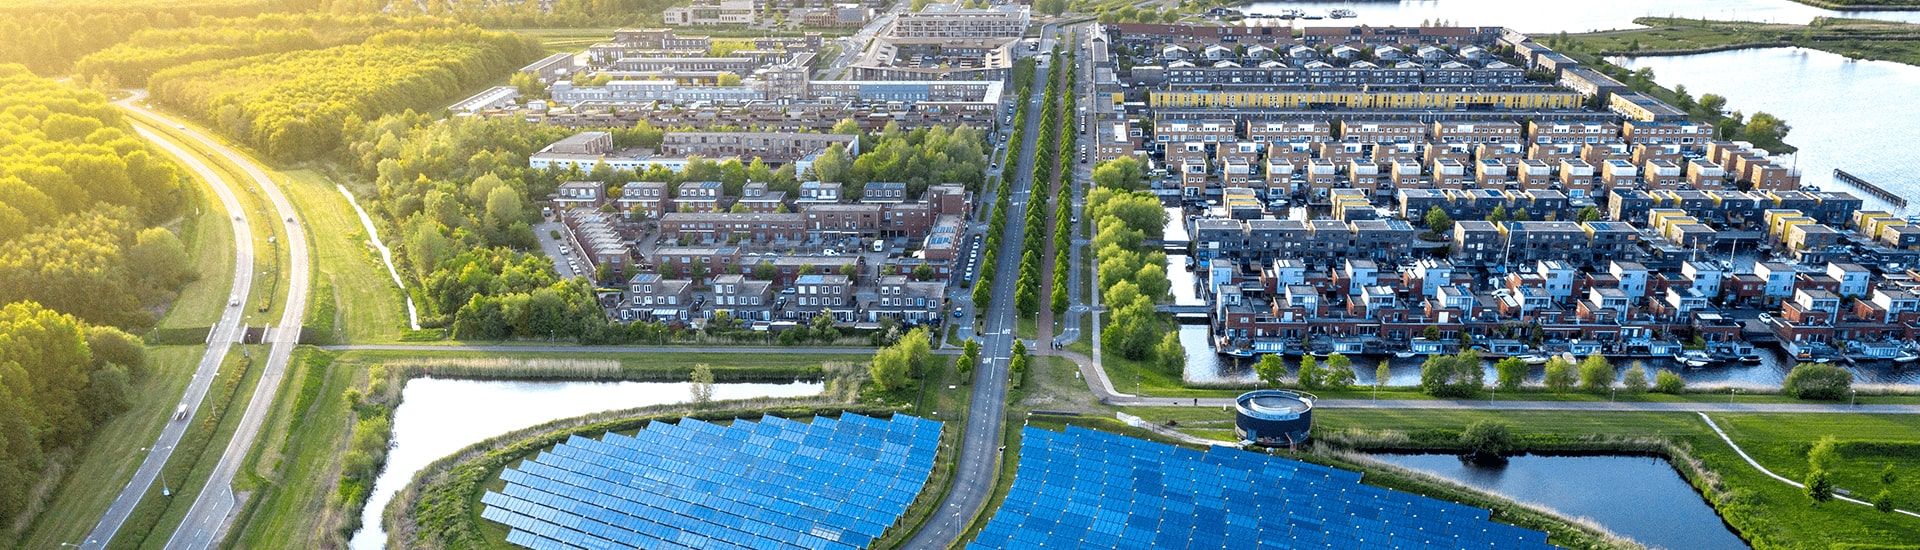 a neighborhood with solar panels